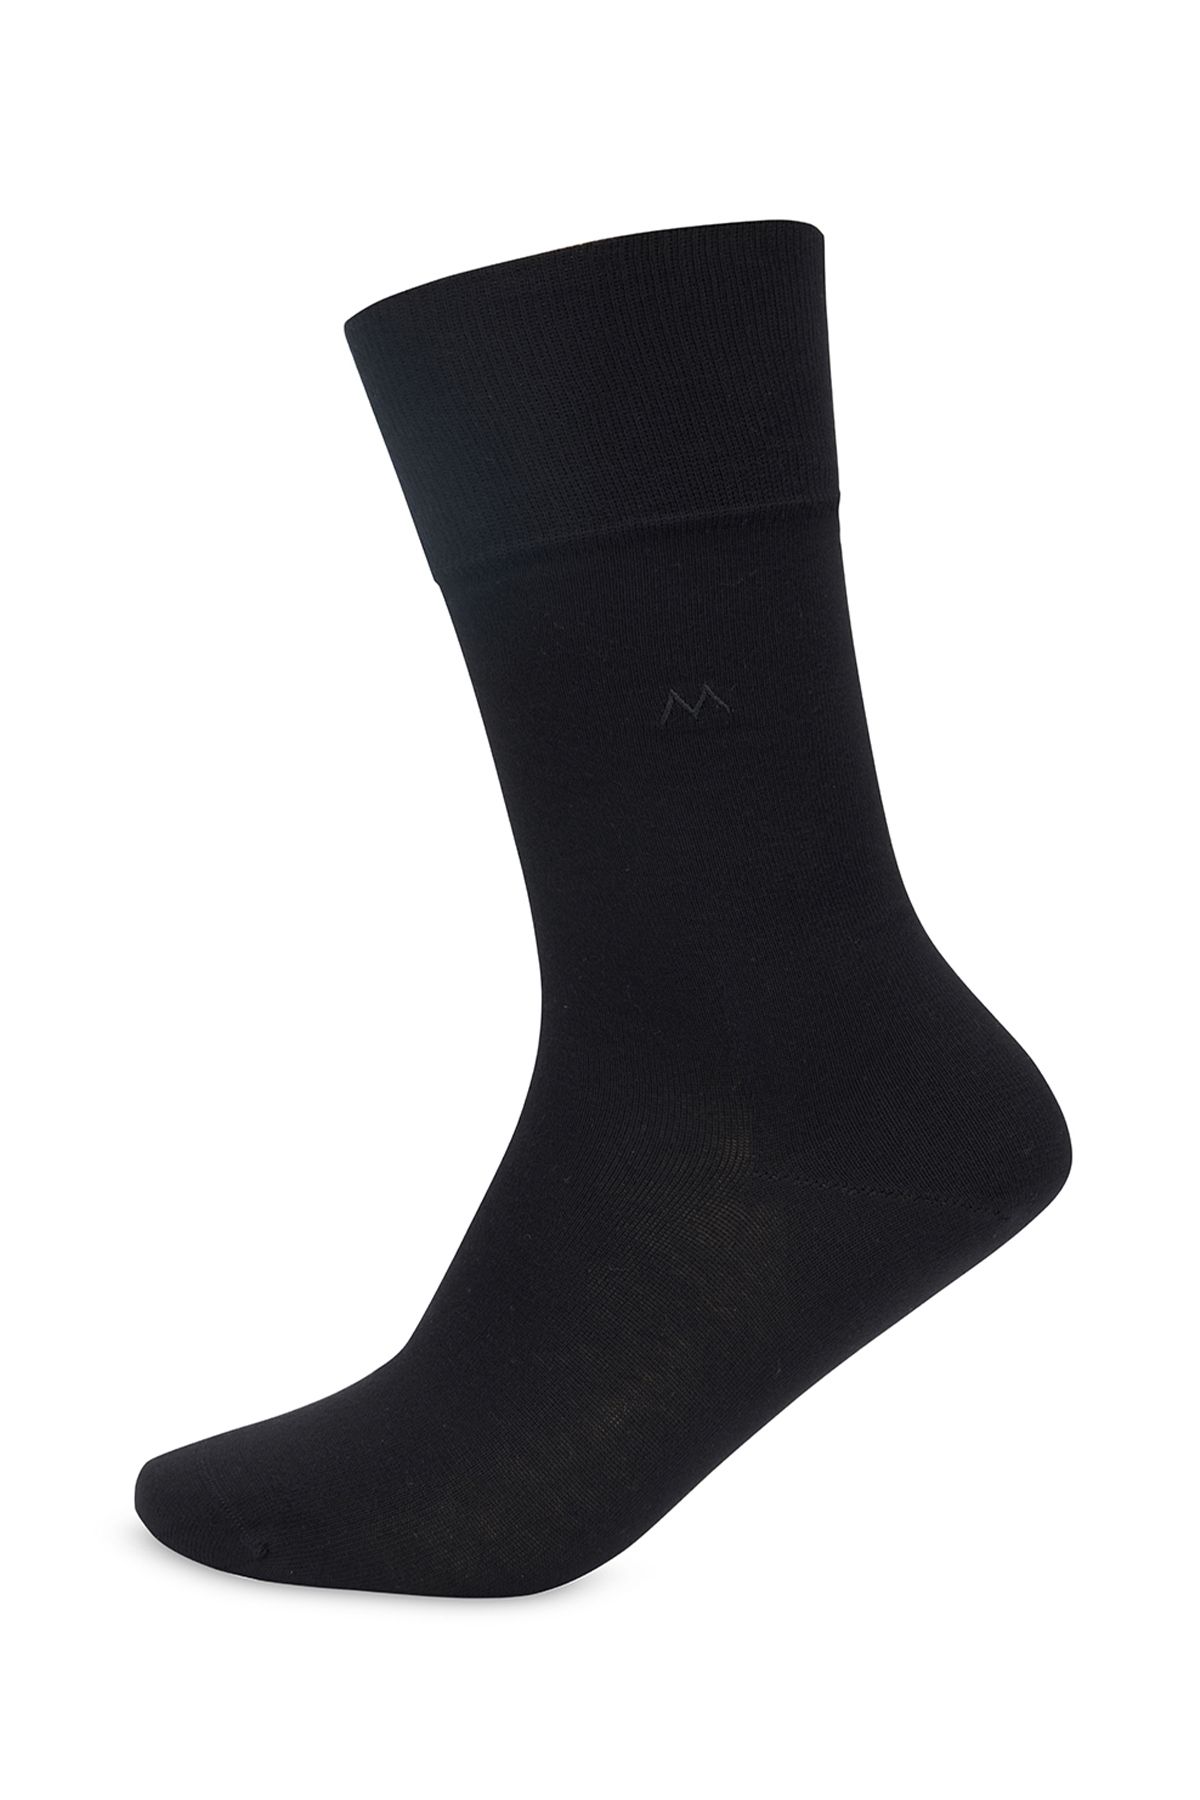 Hemington Pamuklu Siyah Yazlık Çorap